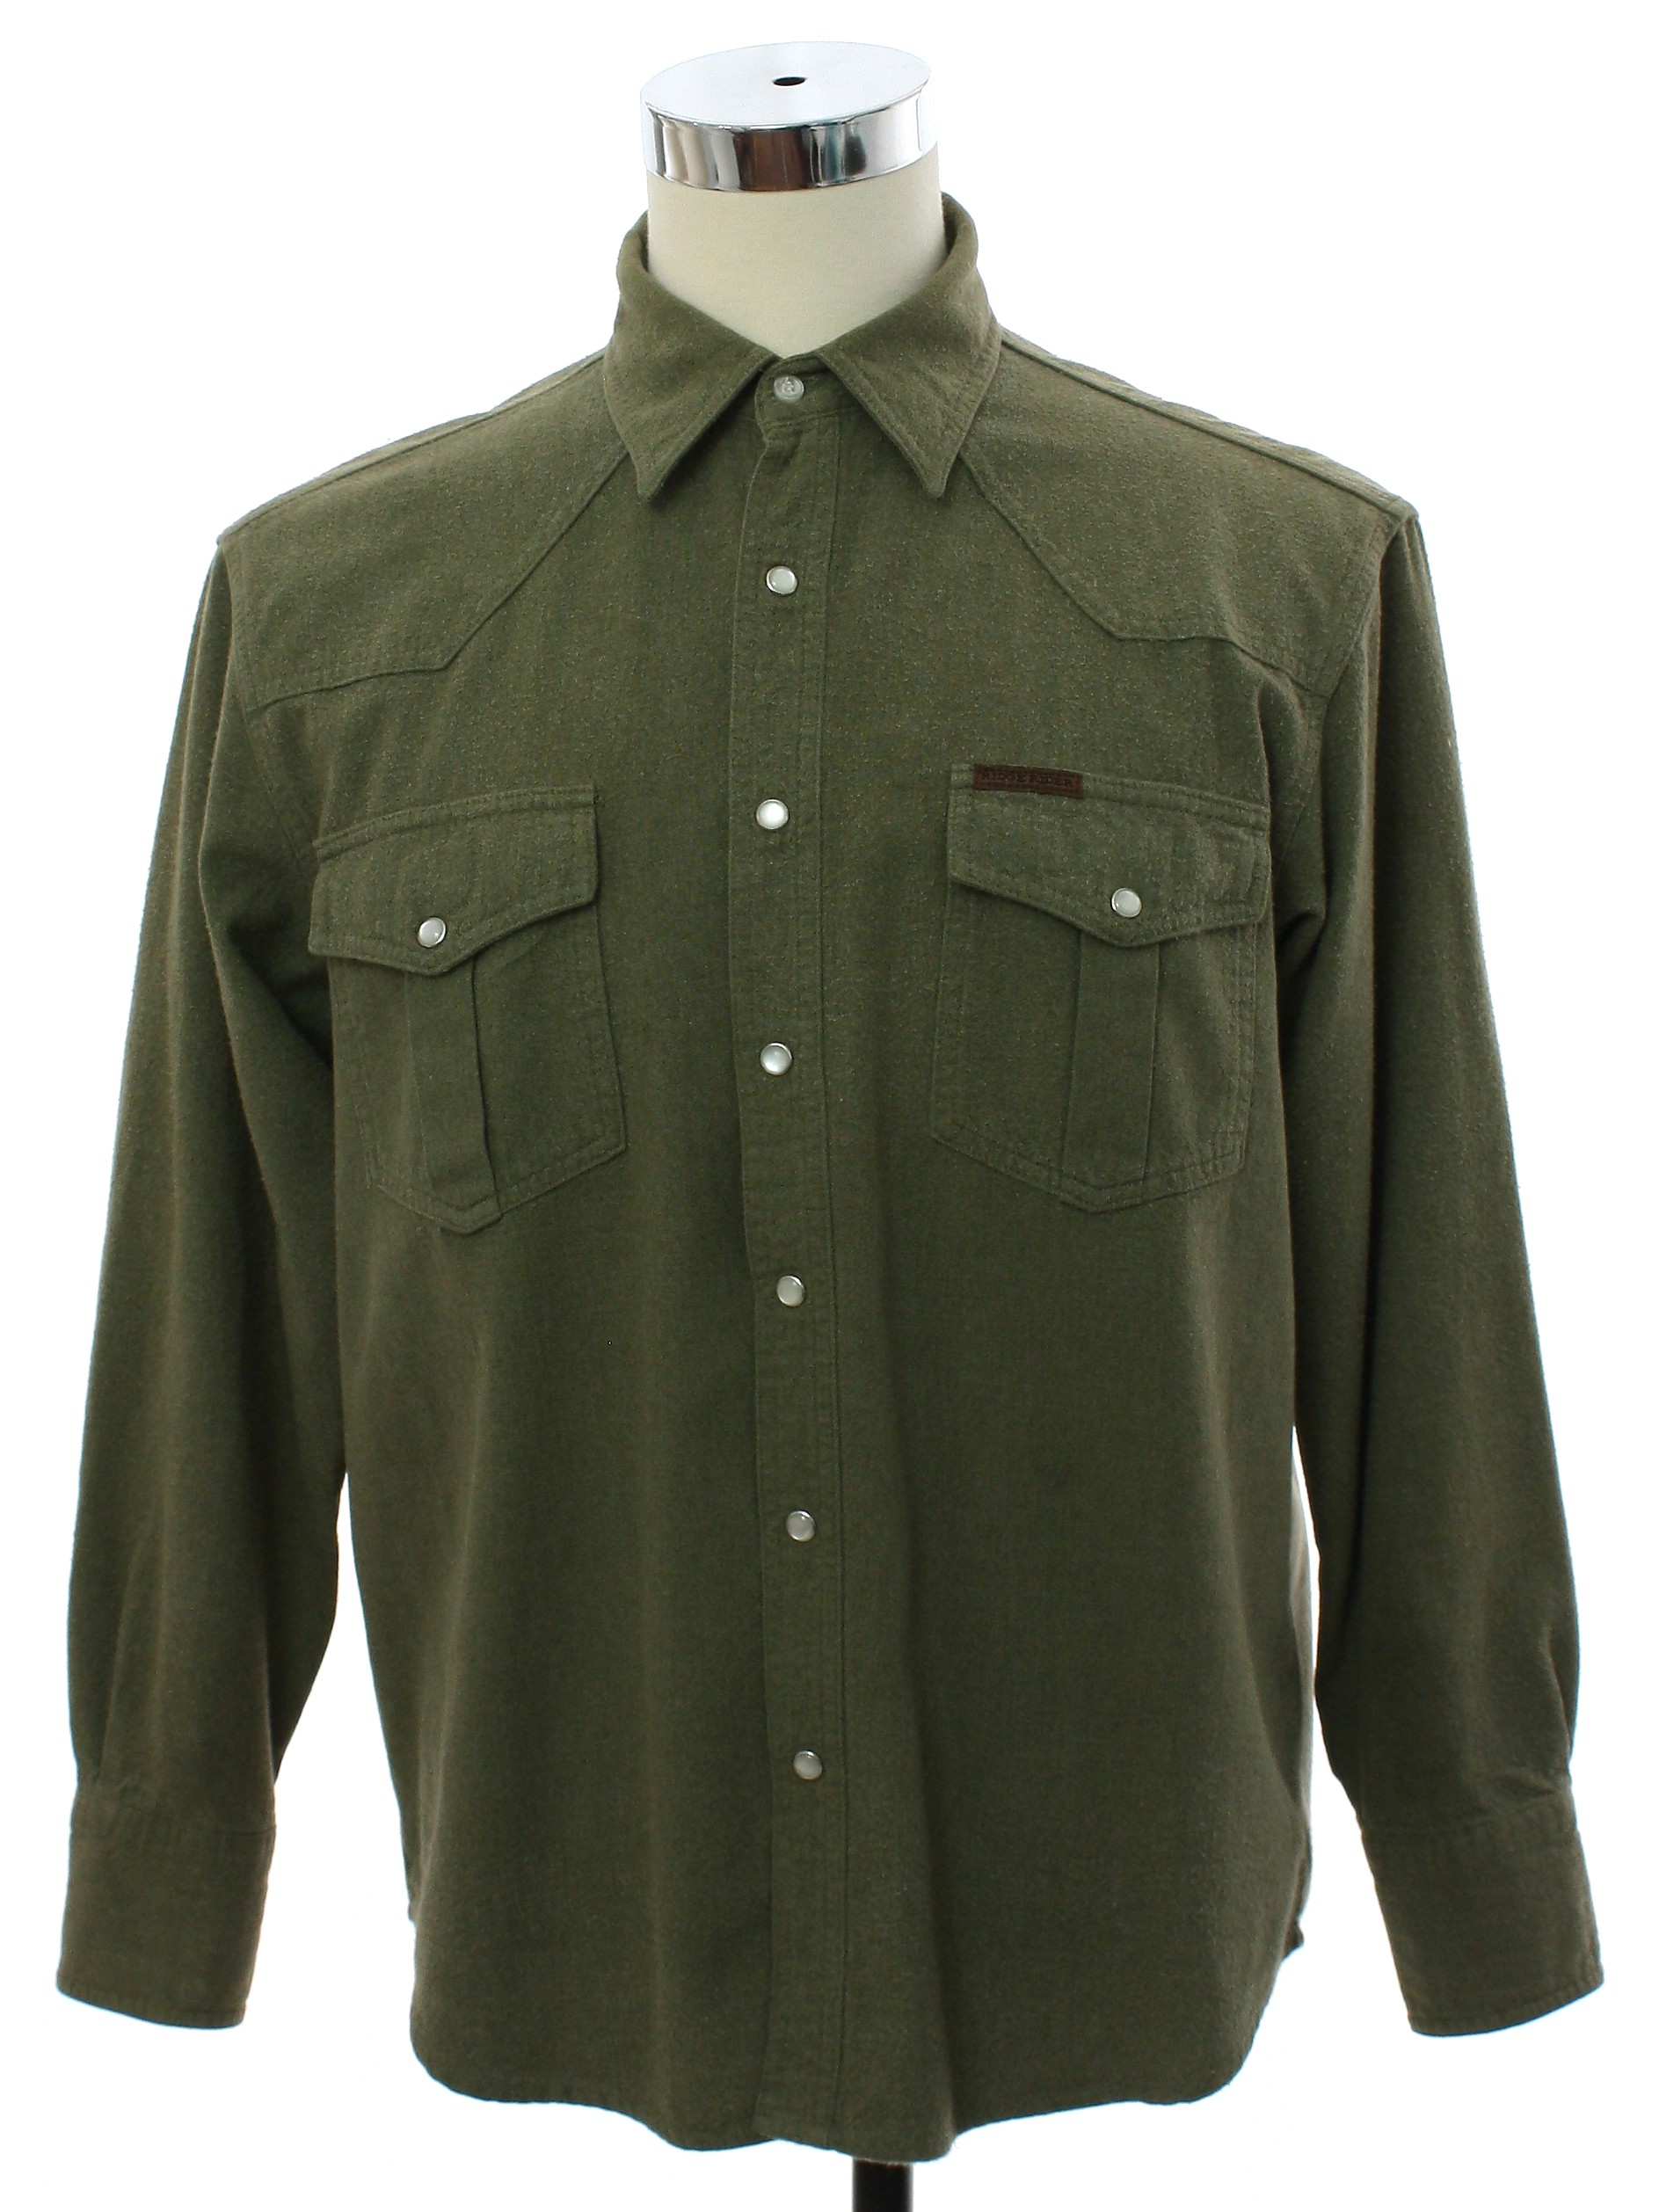 Western Shirt: 90s -Ridge Rider- Mens olive green background cotton ...